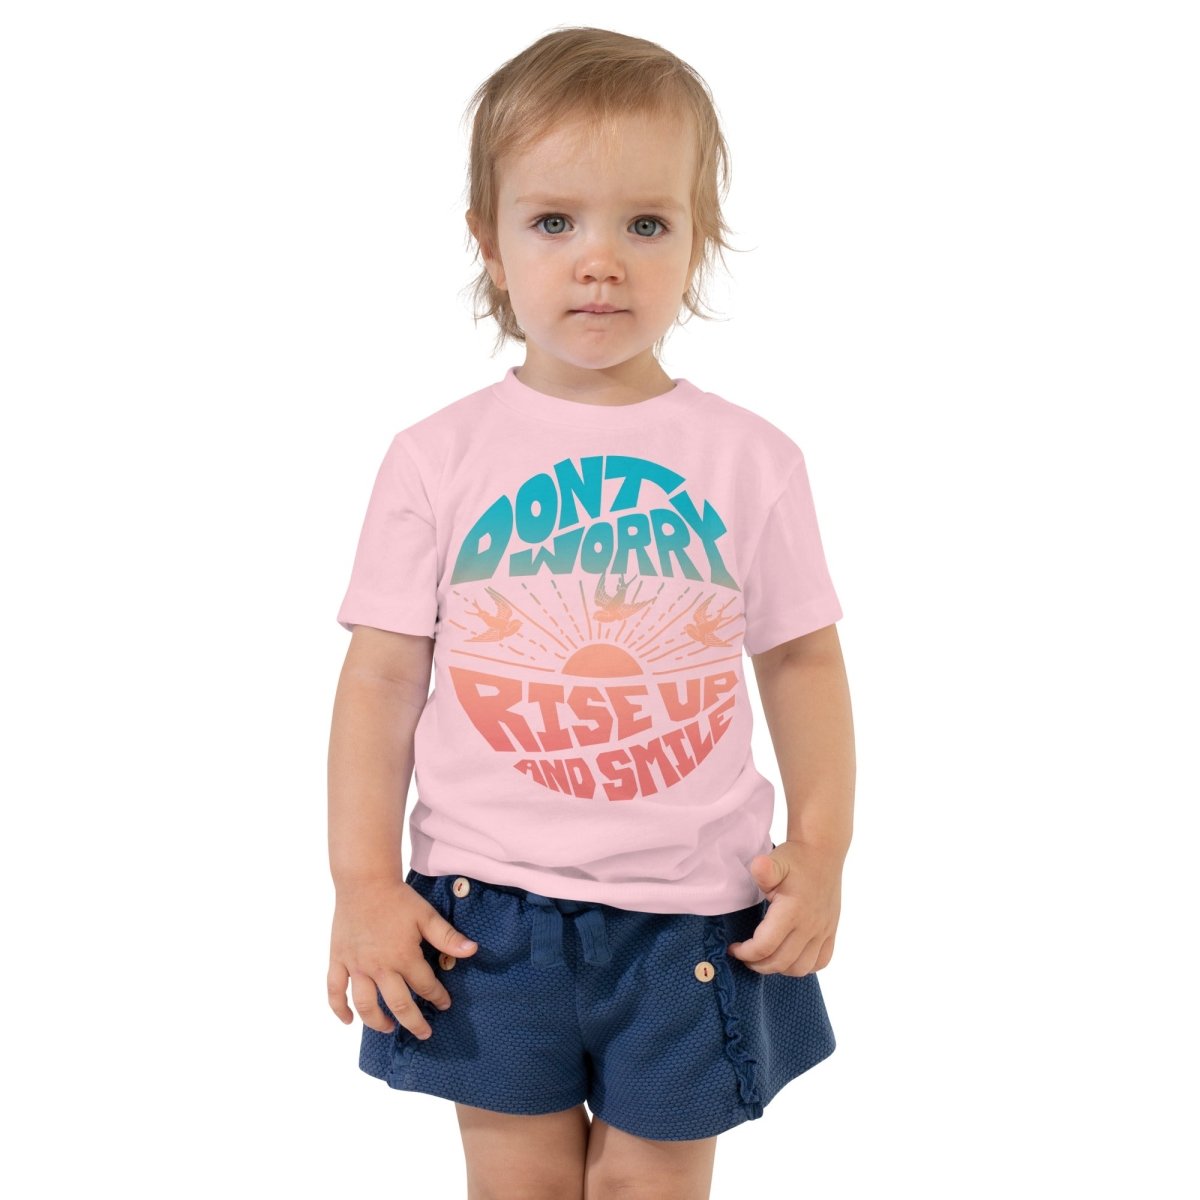 Don't Worry Premium Toddler T-Shirt, Zen Peace Love Gift